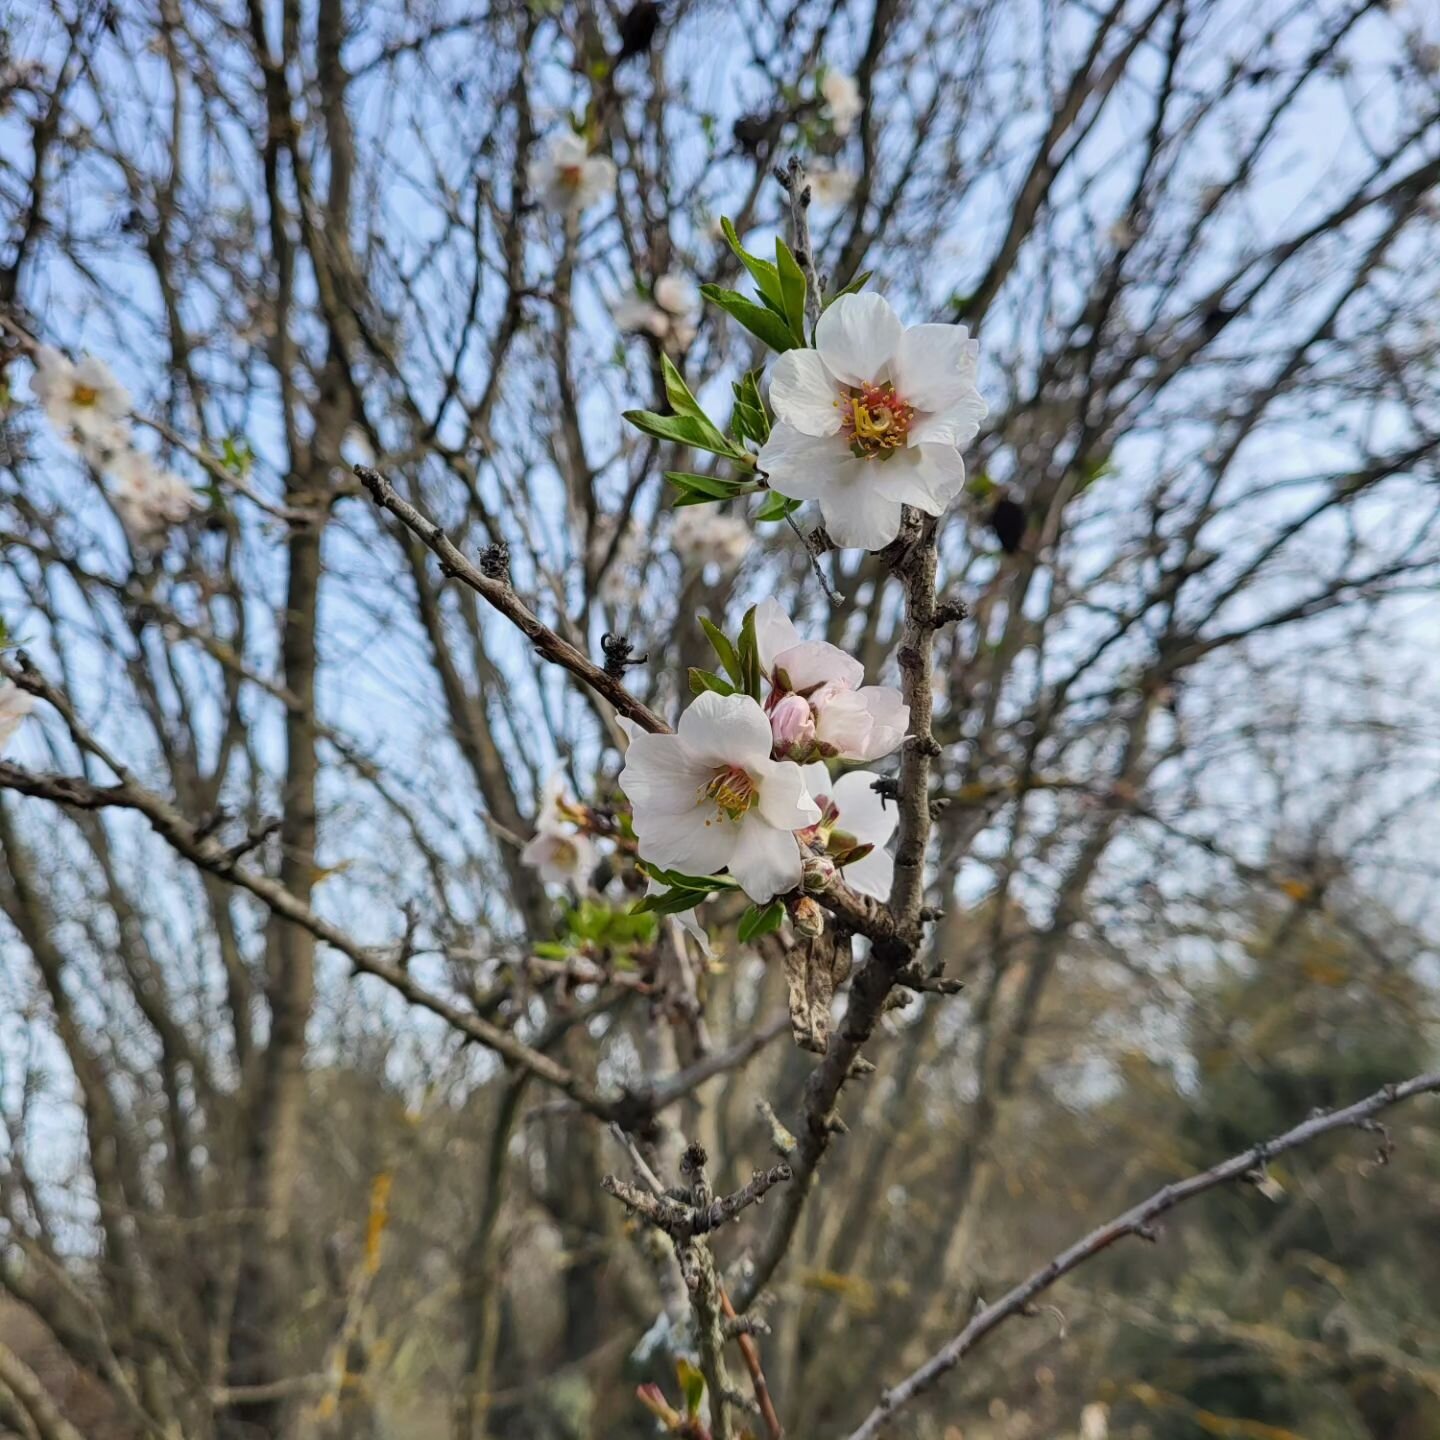 Springtime: almond blossom on the Montagnette

#provence #provencealpescotedazur #travel